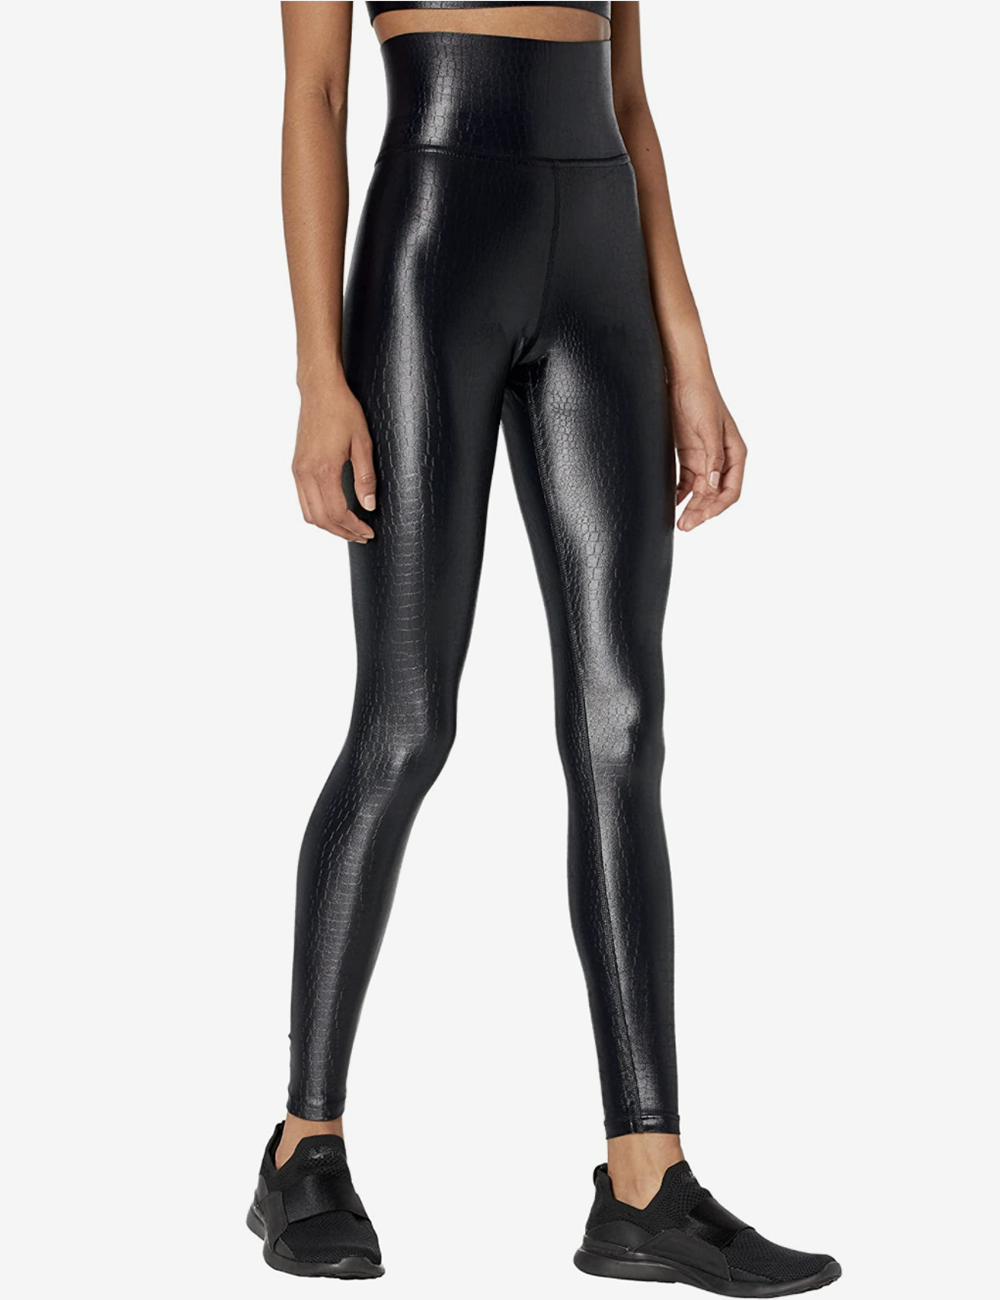 Carbon Fiber X1 Leggings from PHUTURE  Leggings fashion, Leather leggings  fashion, Fiber leggings